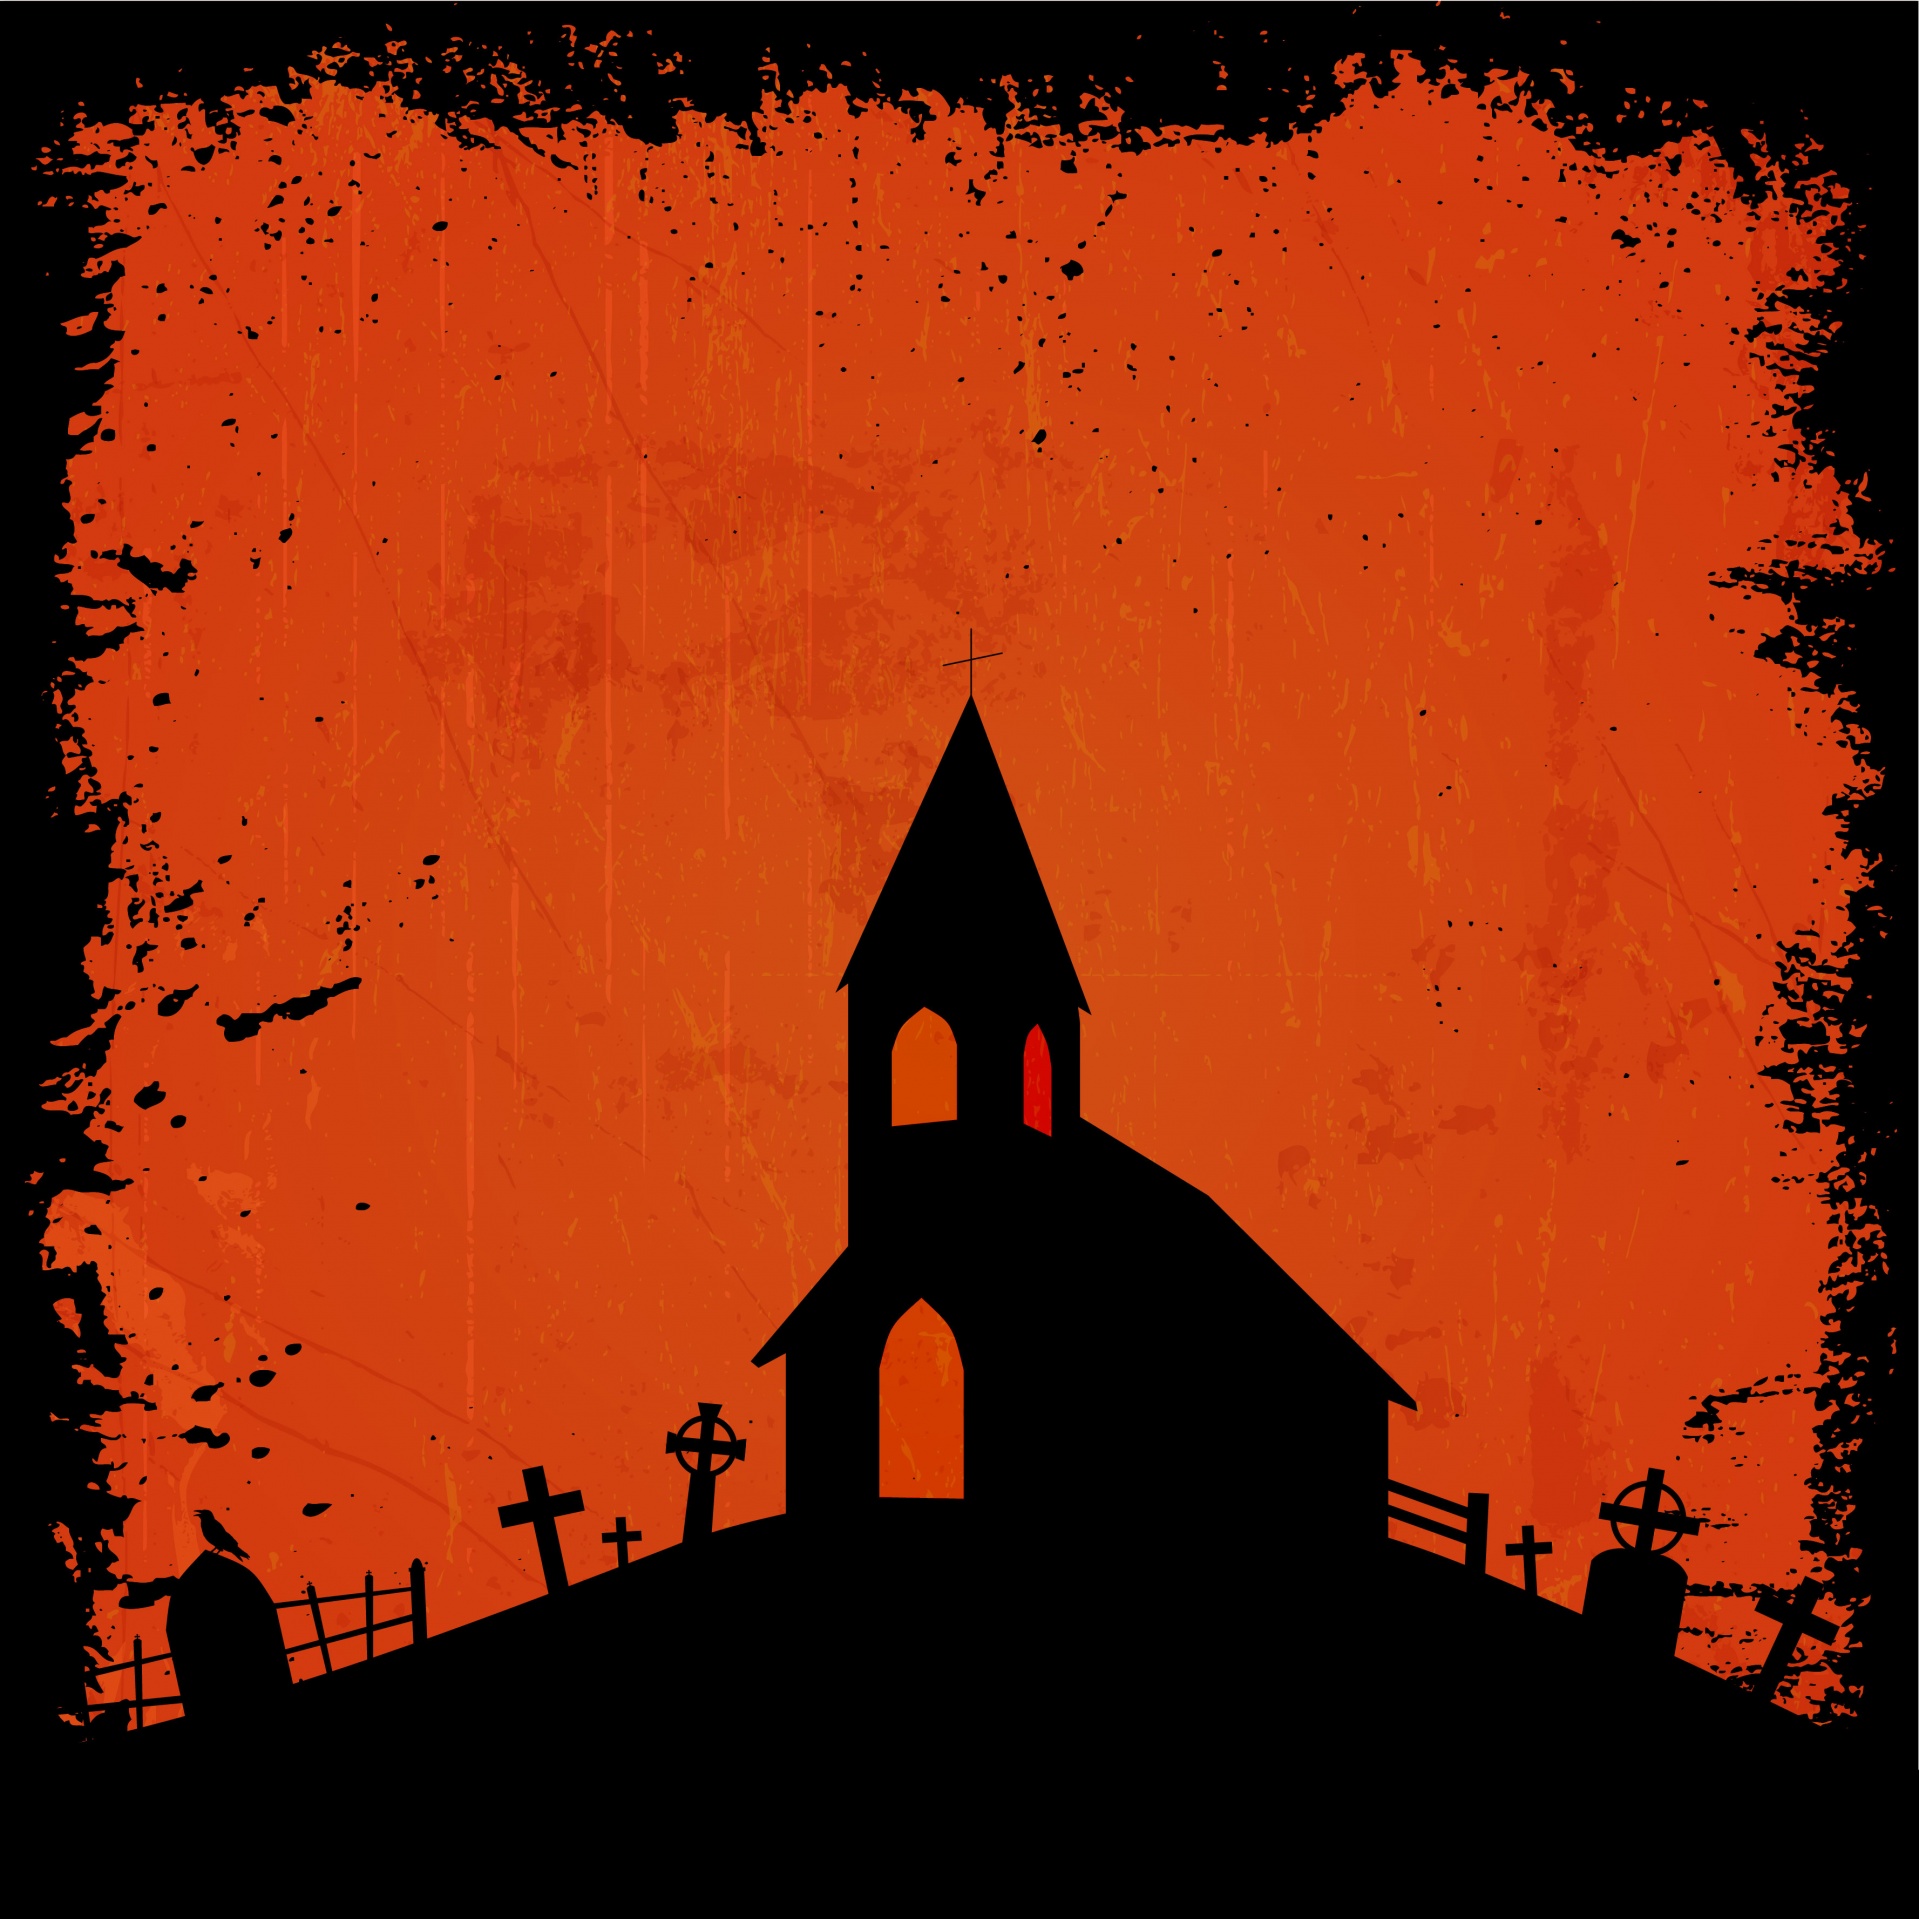 Halloween Haunted House Background